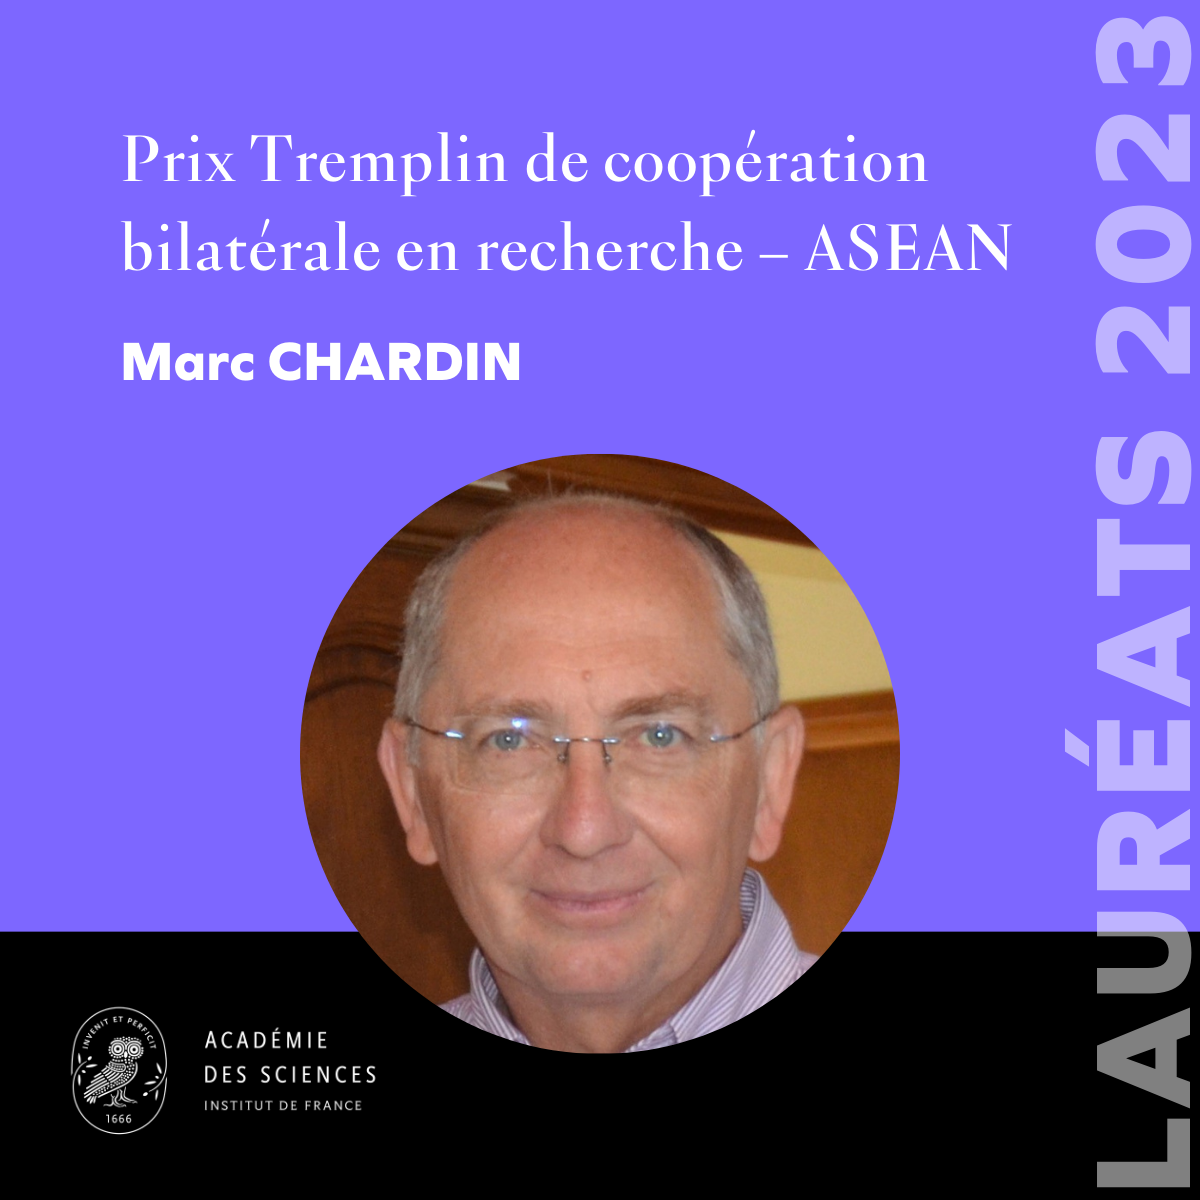 Marc Chardin